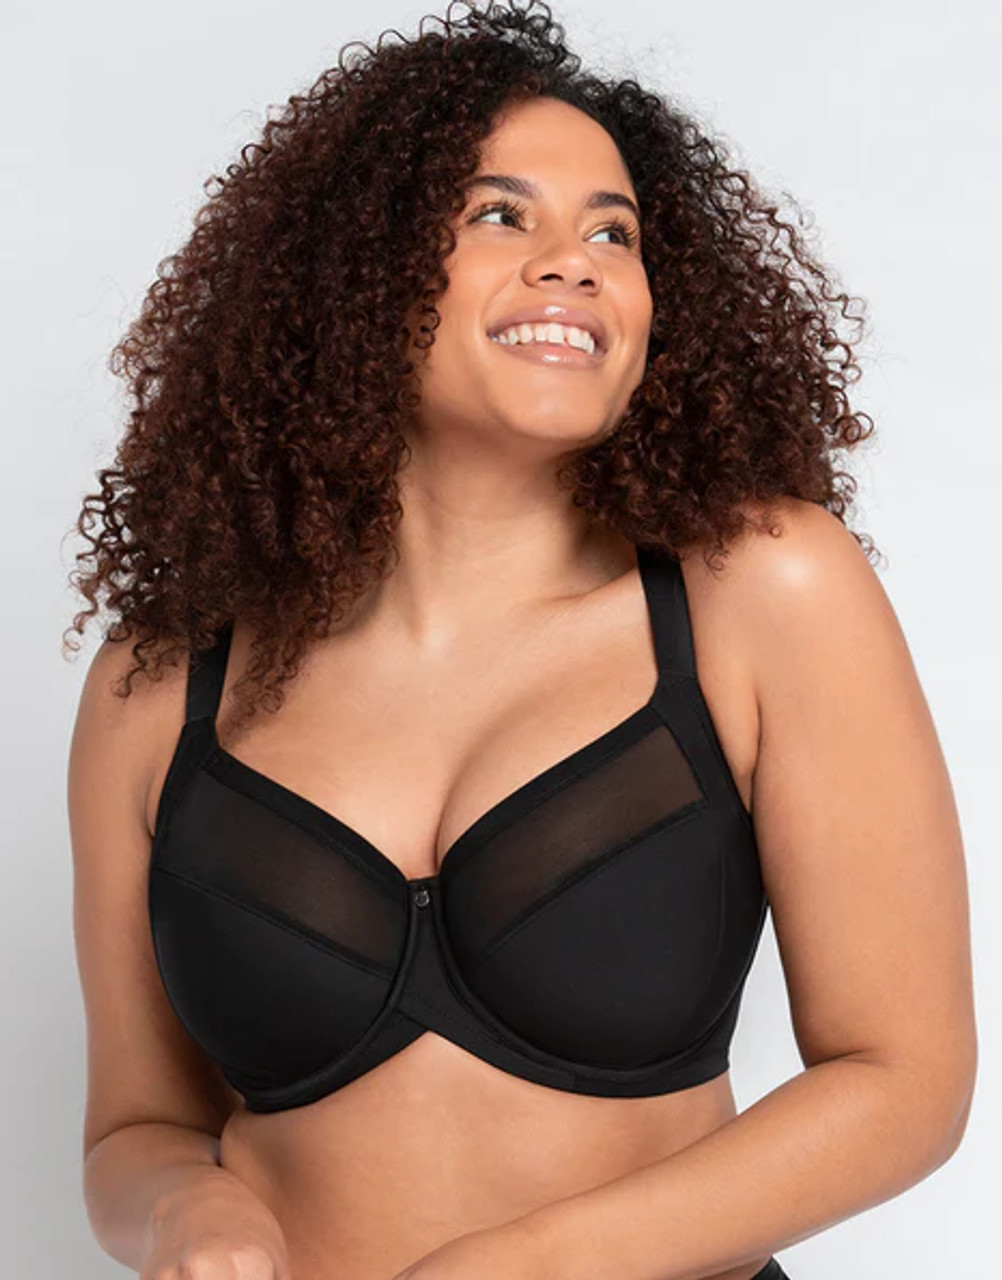 Avenue Body  Women's Plus Size Minimizer Underwire Bra - Black